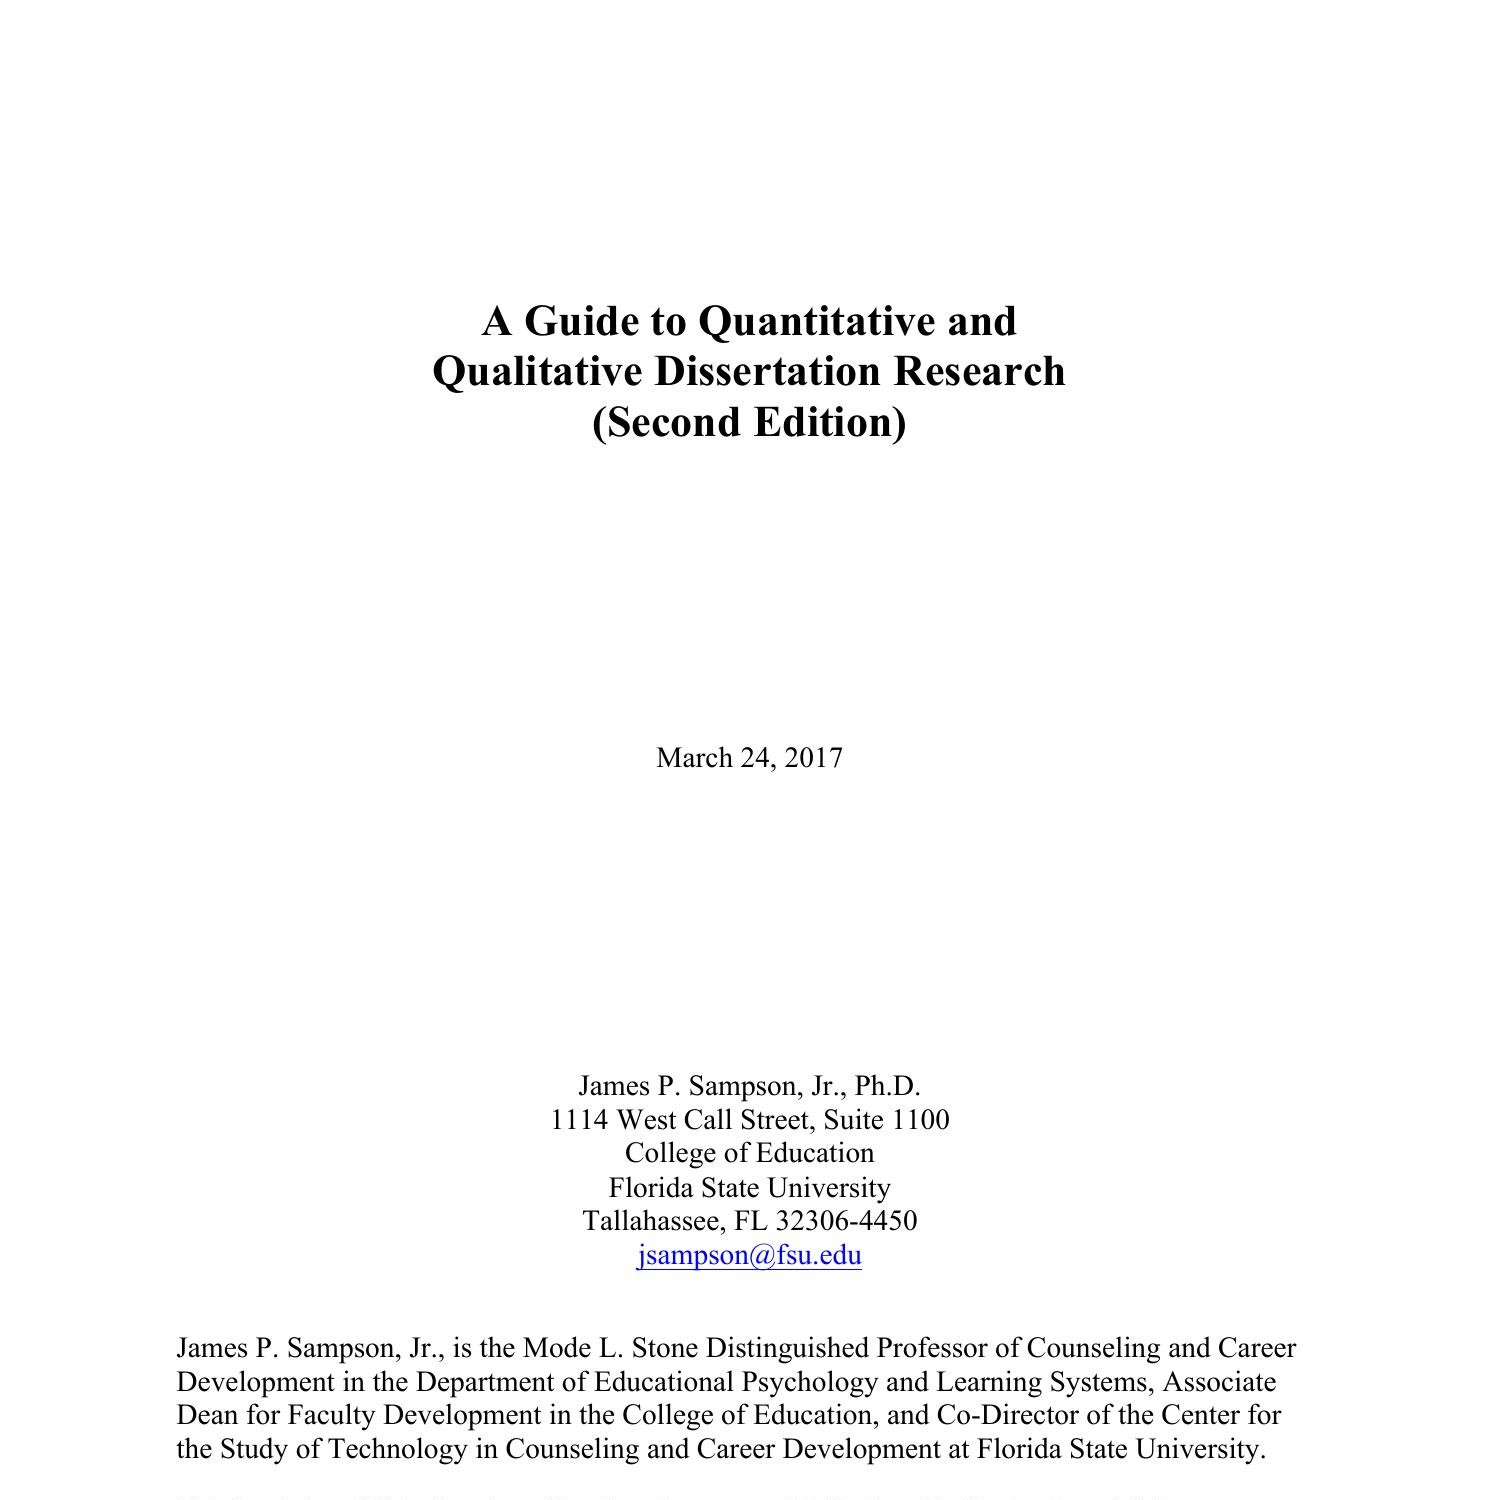 qualitative dissertation titles